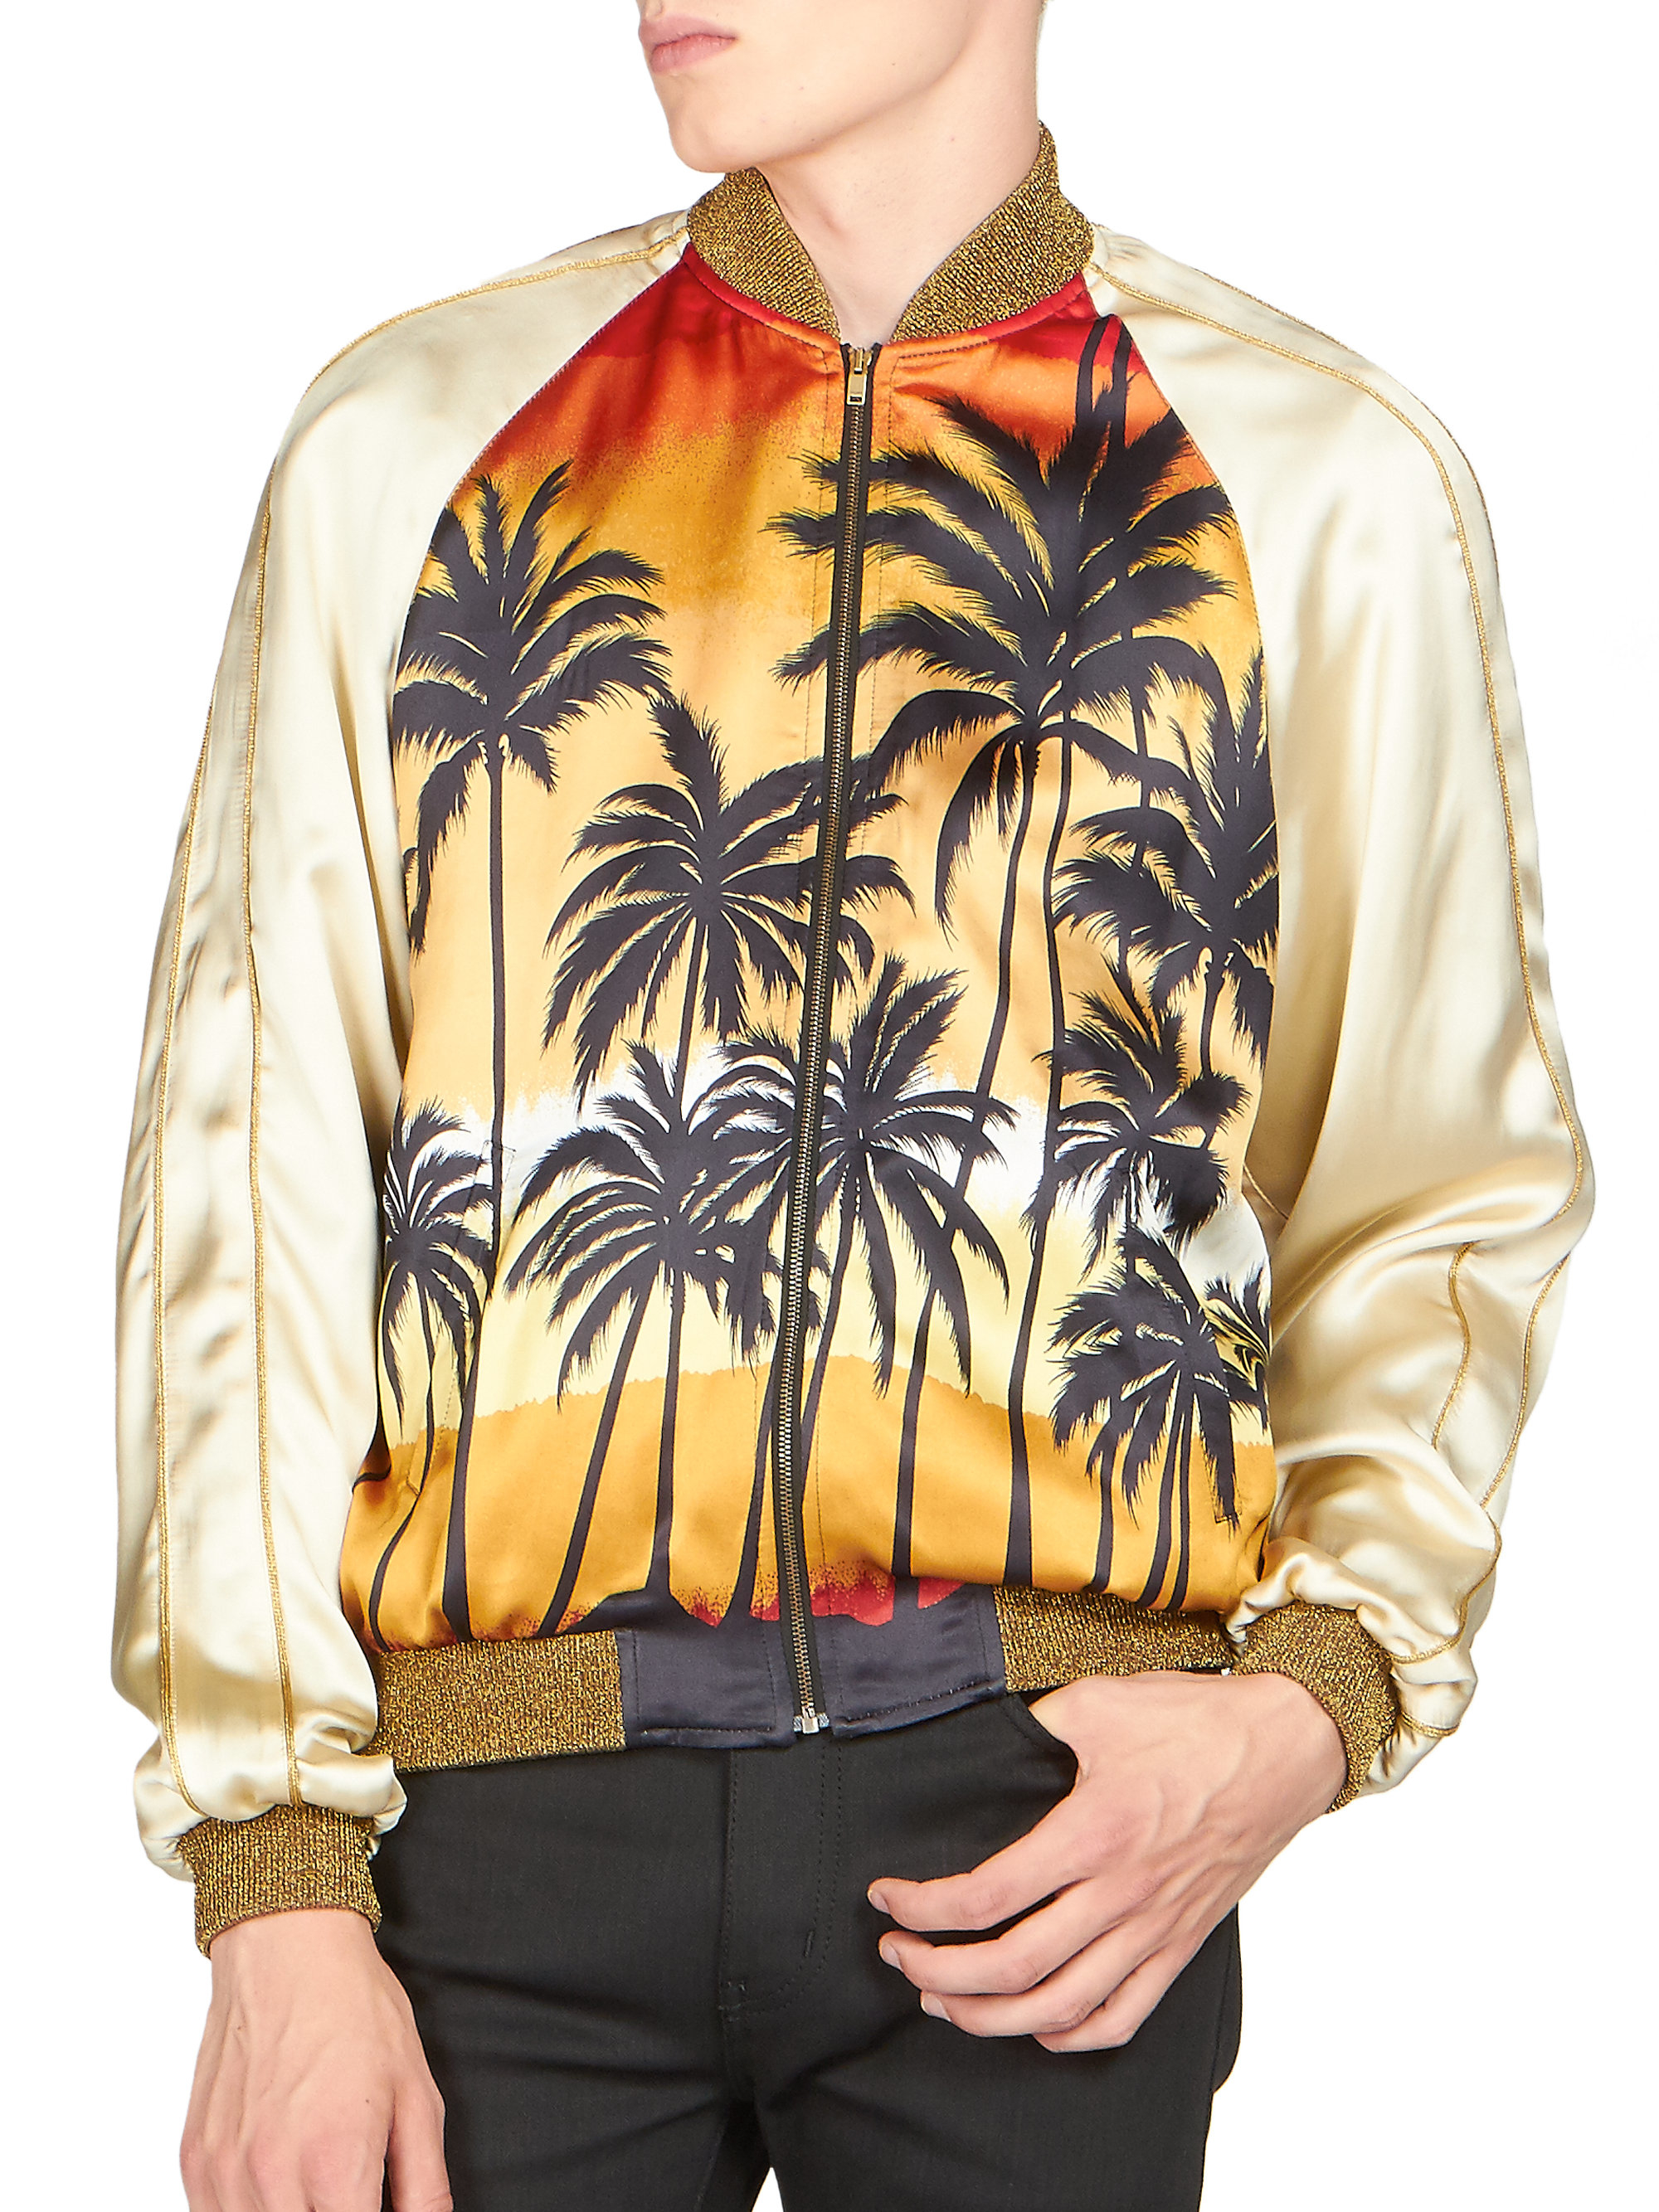 Saint Laurent Synthetic Palm Print Bomber Jacket for Men - Lyst